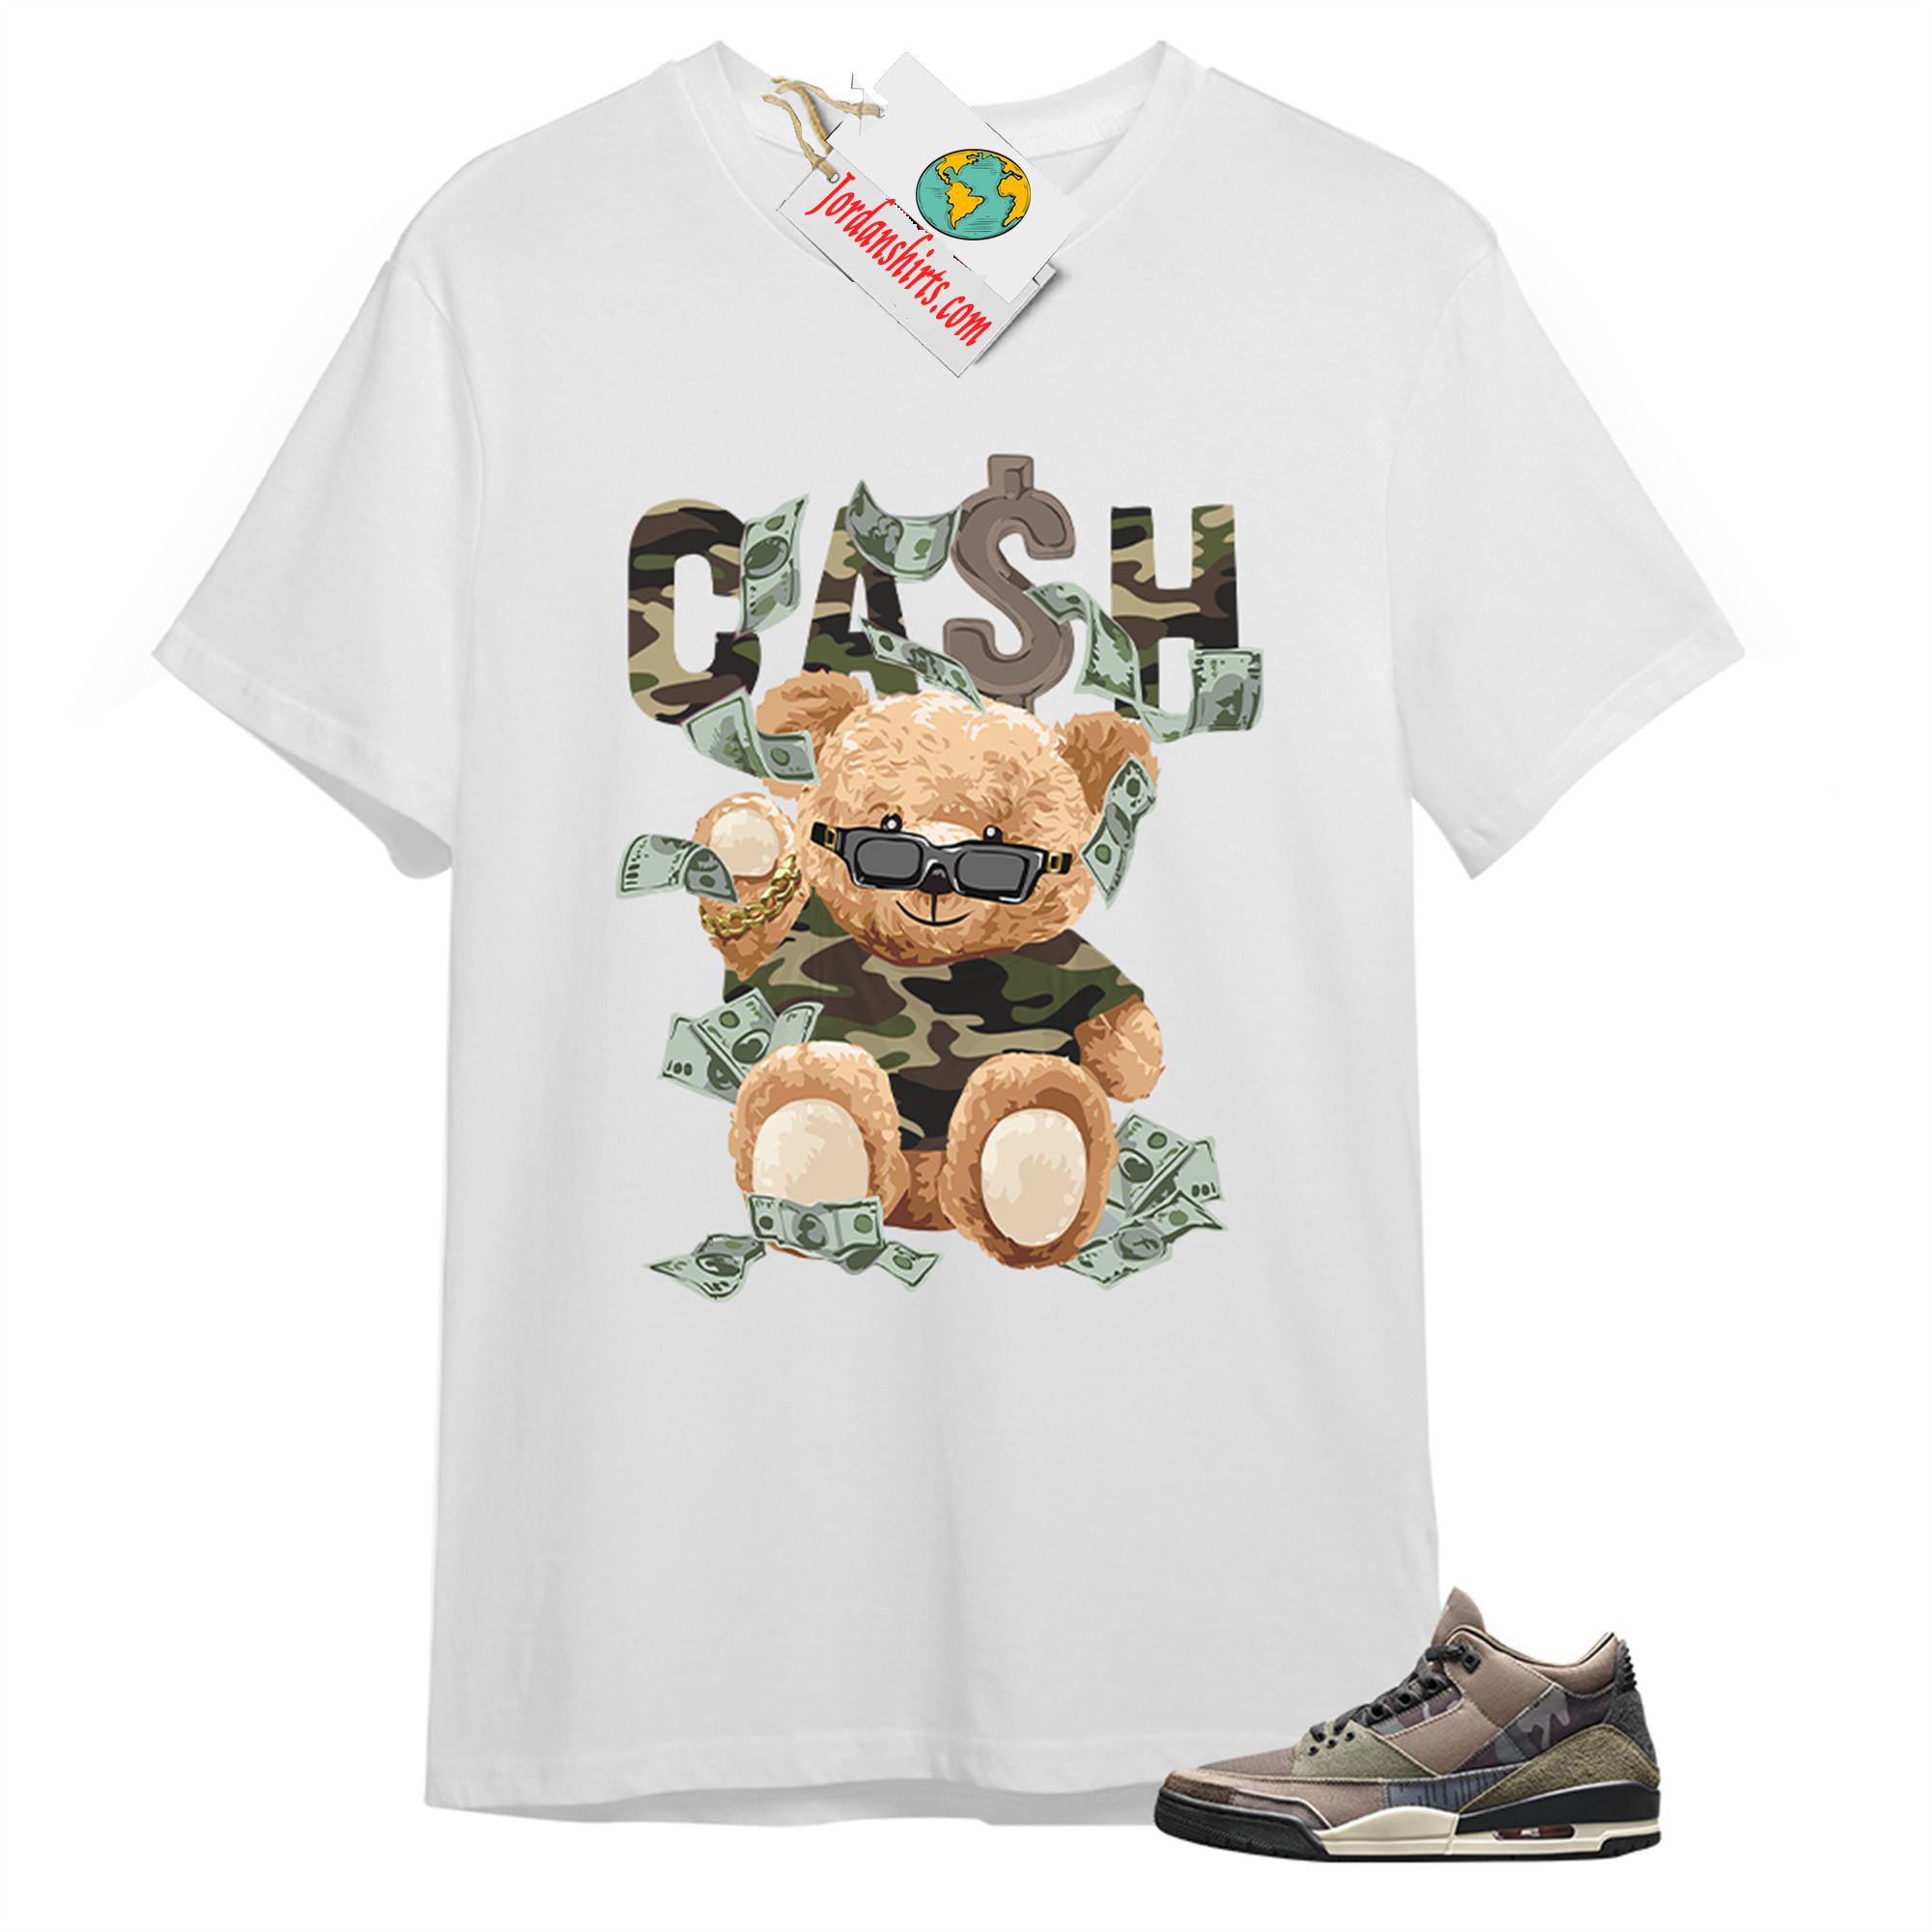 Jordan 3 Shirt, Cash Teddy Bear In Sunglasses White T-shirt Air Jordan 3 Camo 3s Size Up To 5xl